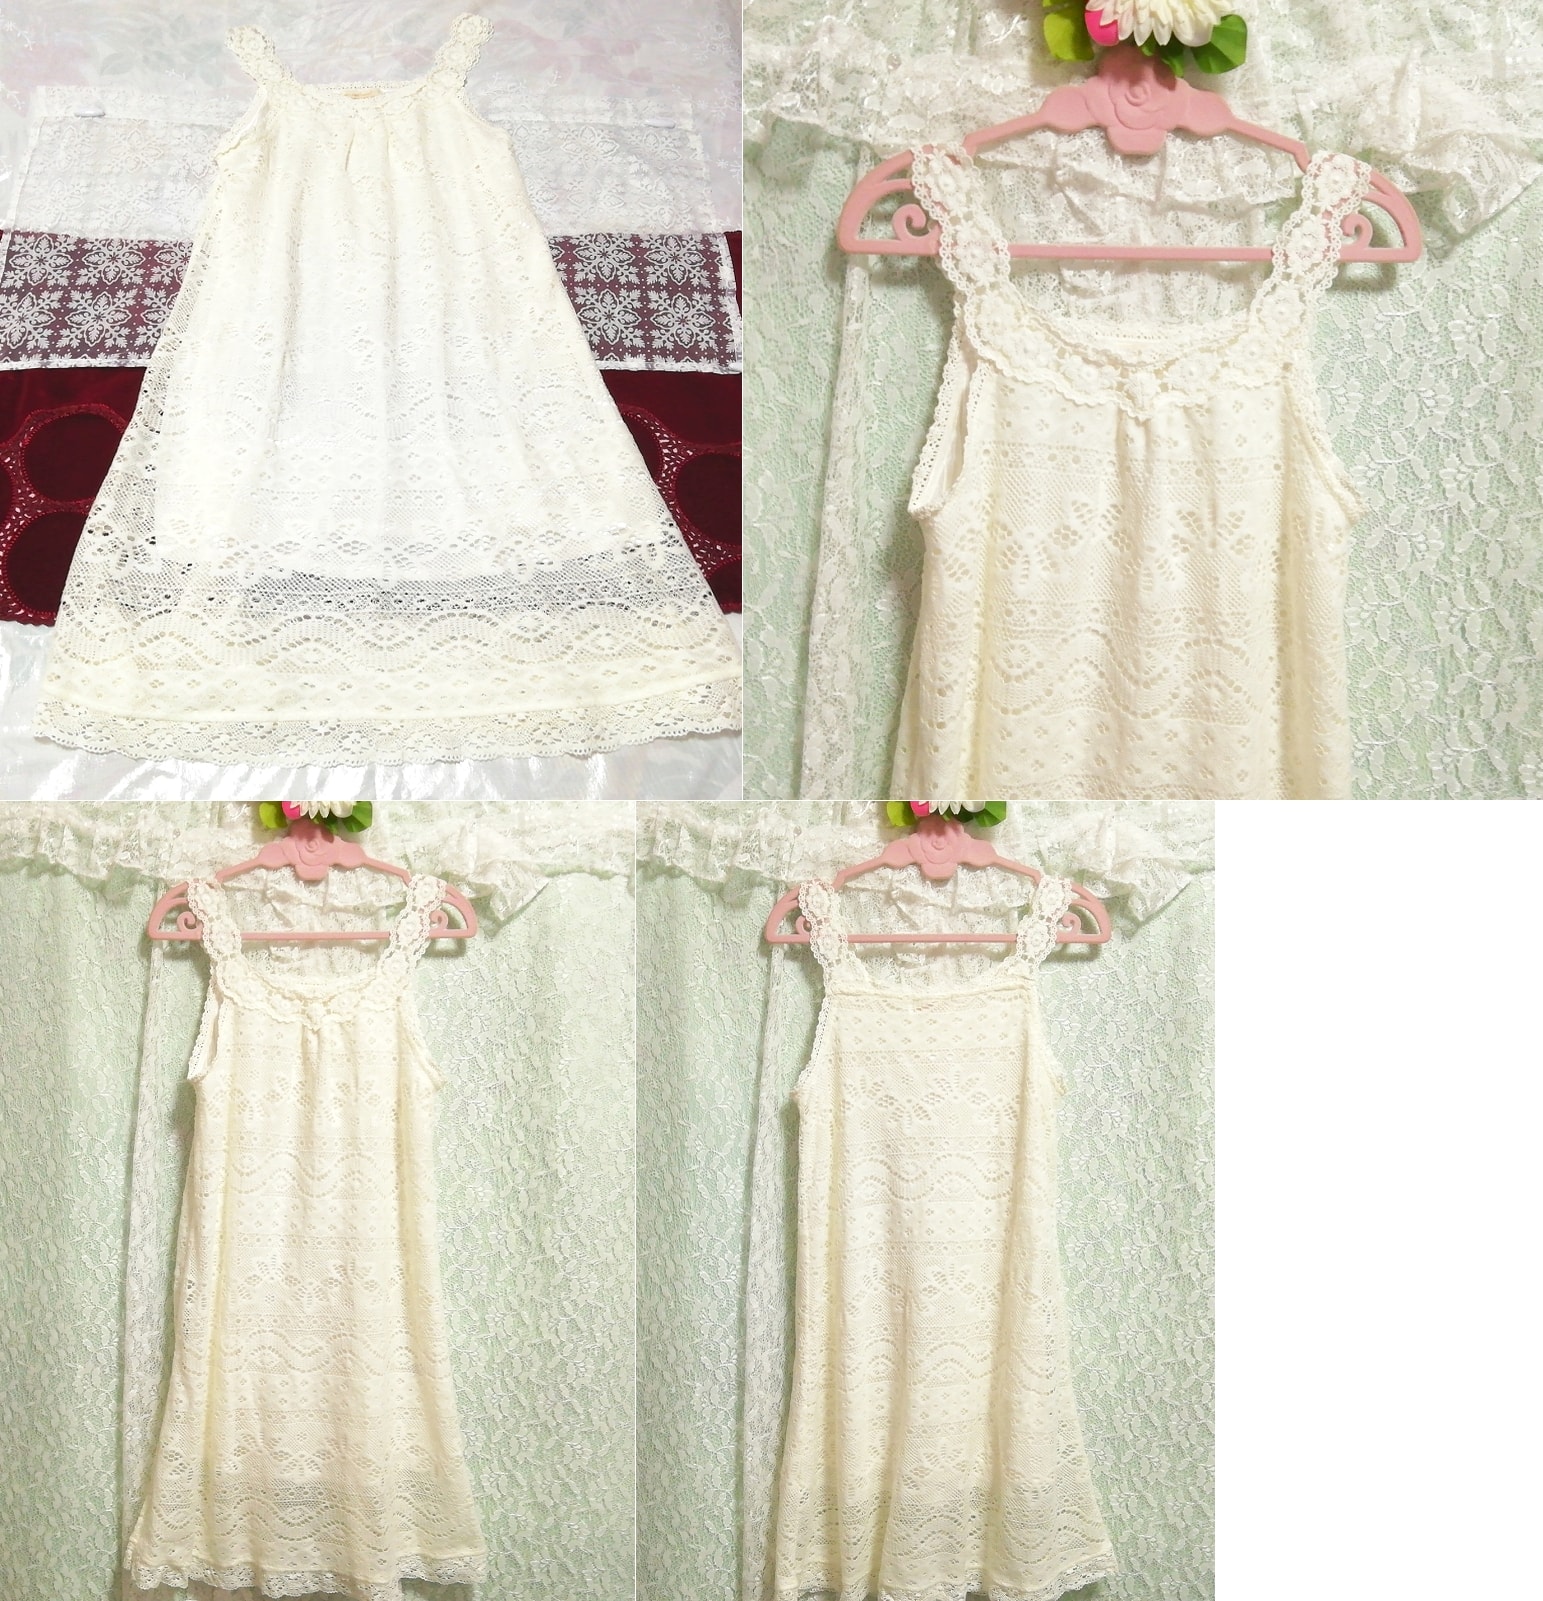 White lace knit sleeveless negligee nightgown nightwear half dress, knee length skirt, m size